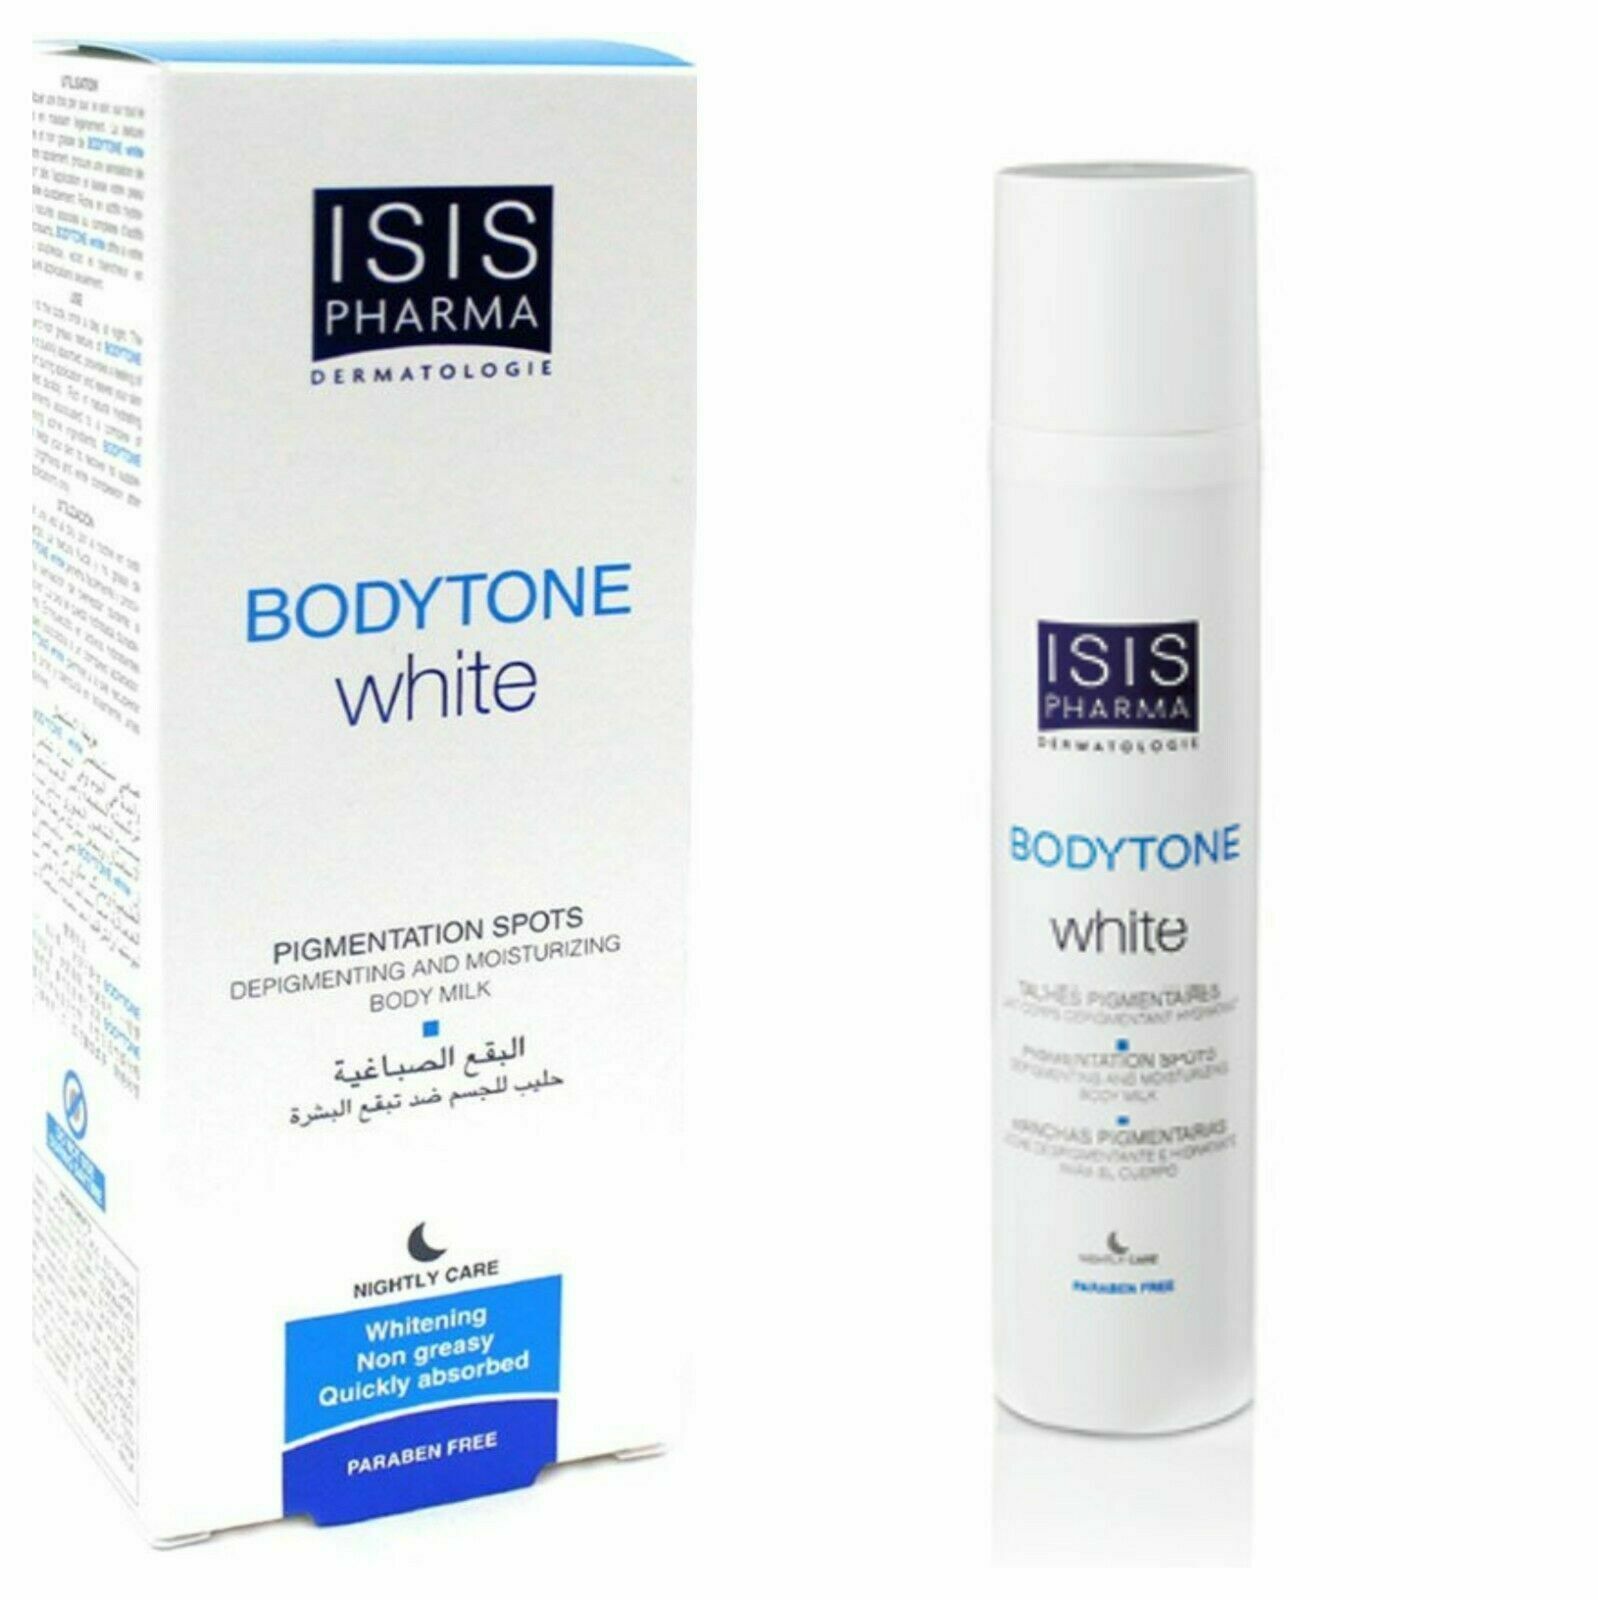 ISIS Pharma BODYTONE White Spots & Moisturizing Body Milk 100ml - $77.00